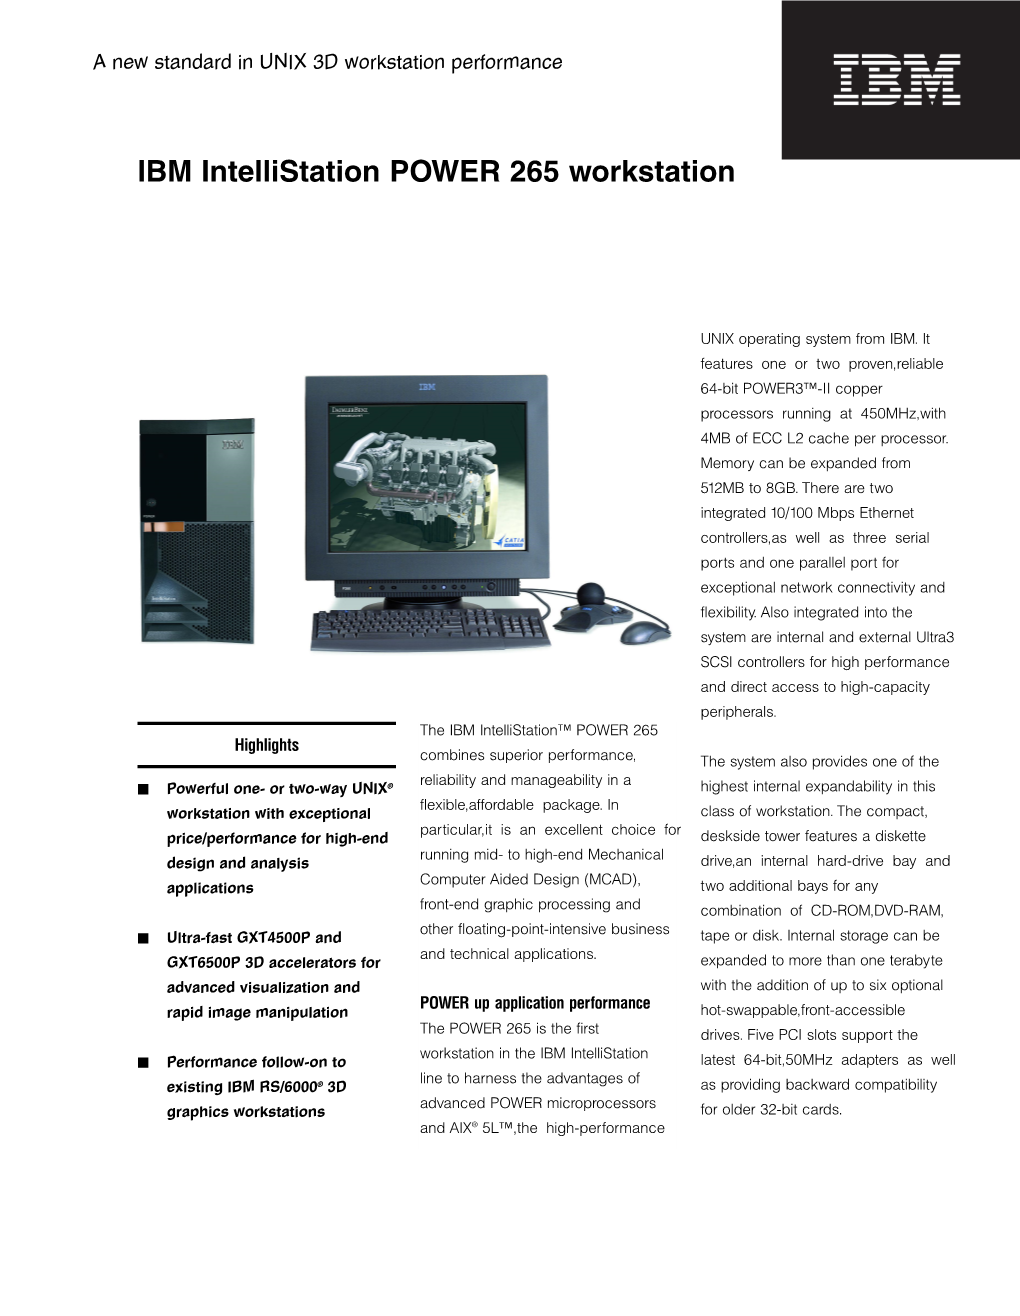 IBM Intellistation POWER 265 Workstation